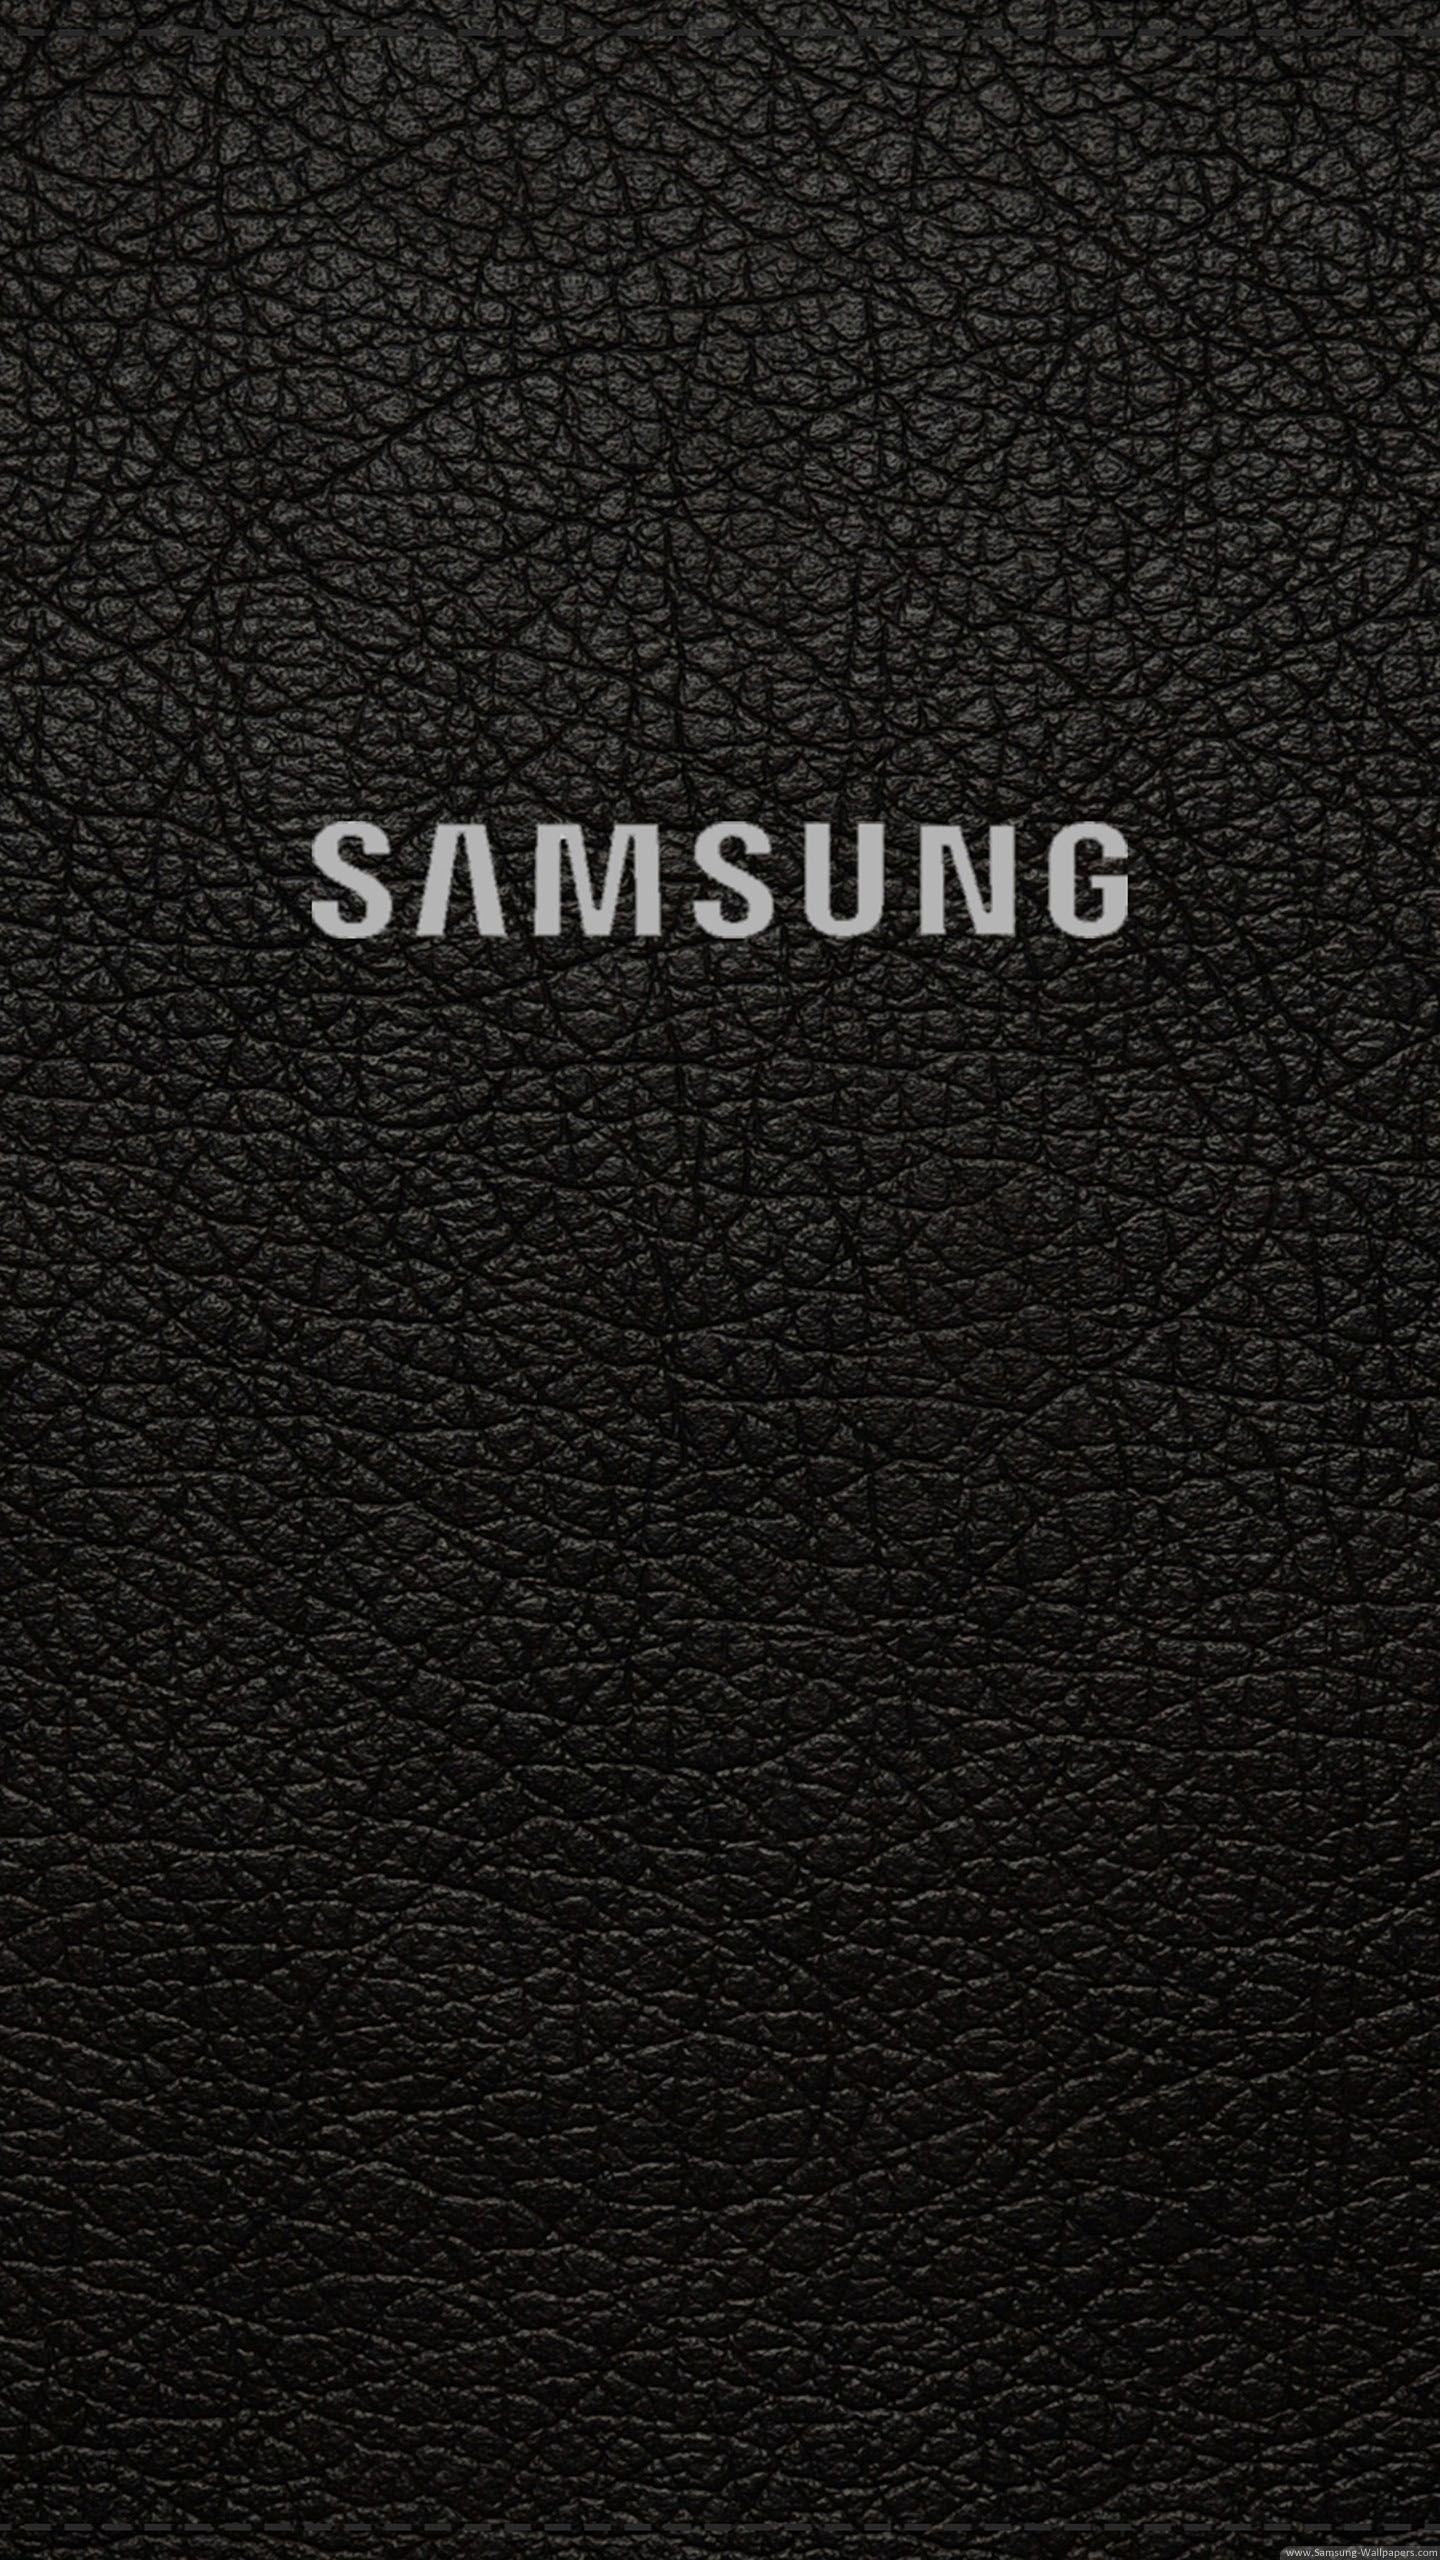 Samsung Logo Wallpapers 4k Hd Samsung Logo Backgrounds On Wallpaperbat 1641